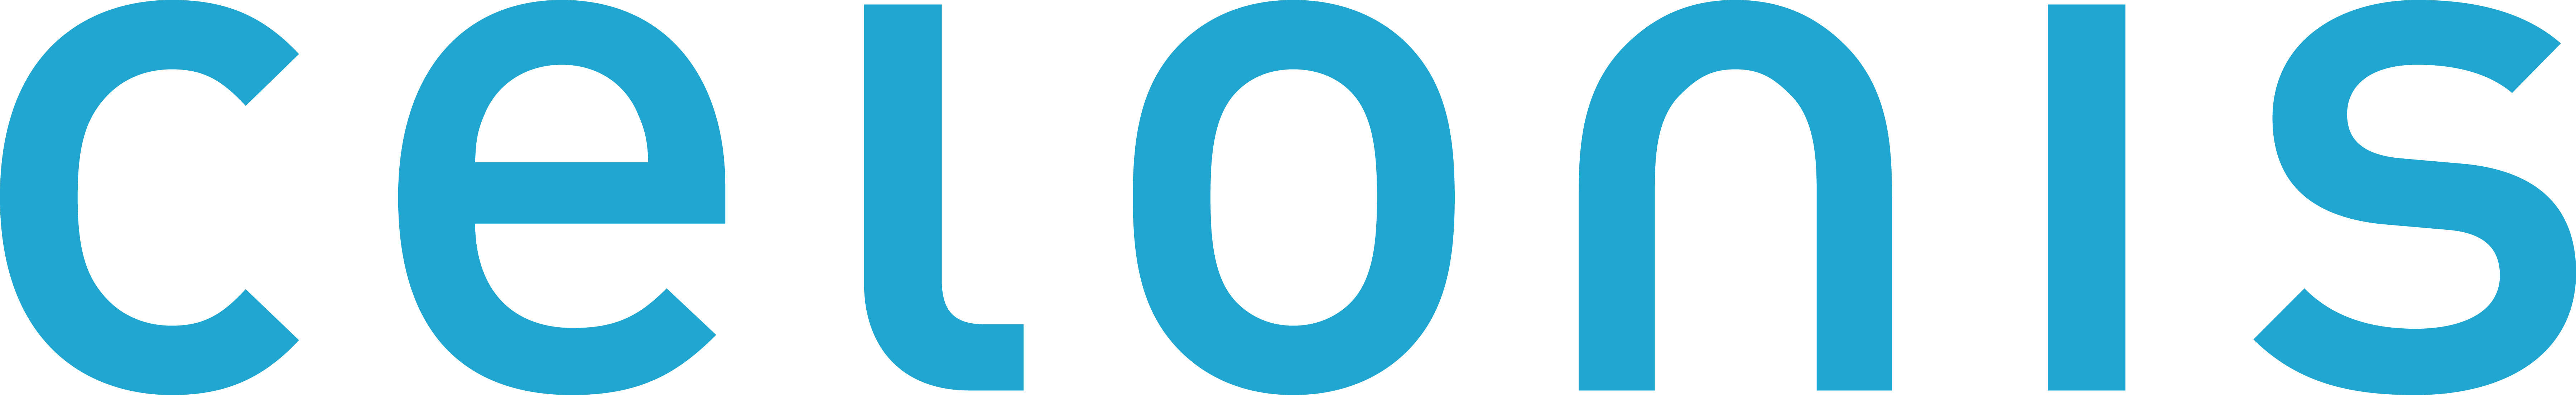 celonis_logo